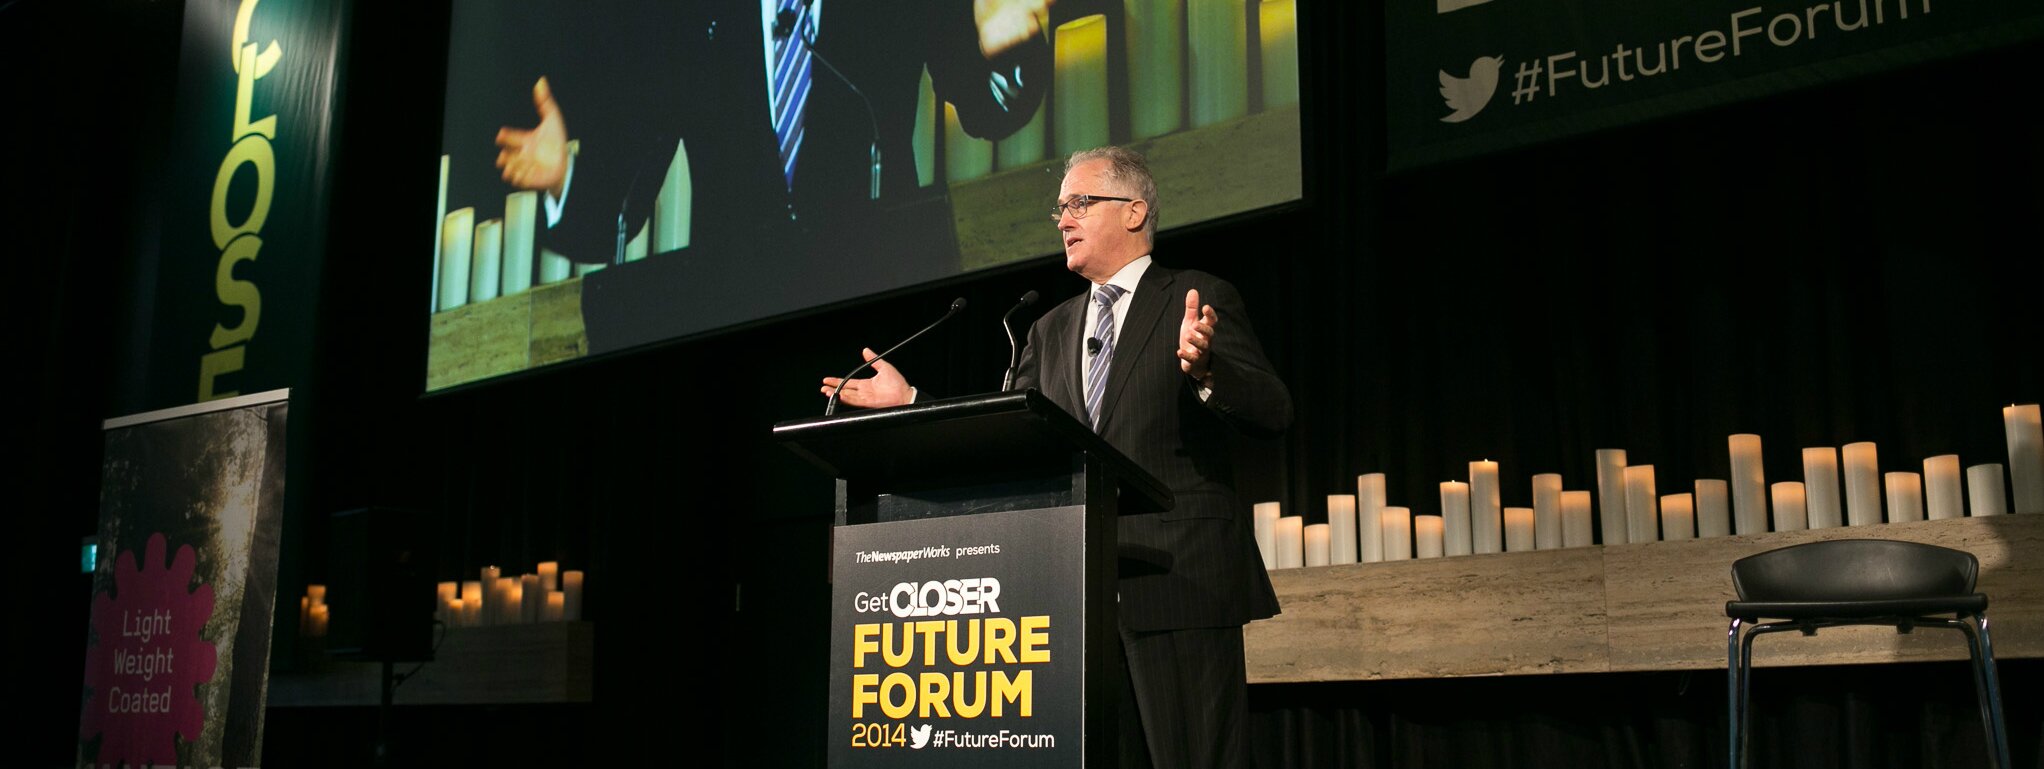 Malcolm Turnbull speaks at Sydney's newspaper Future Forum